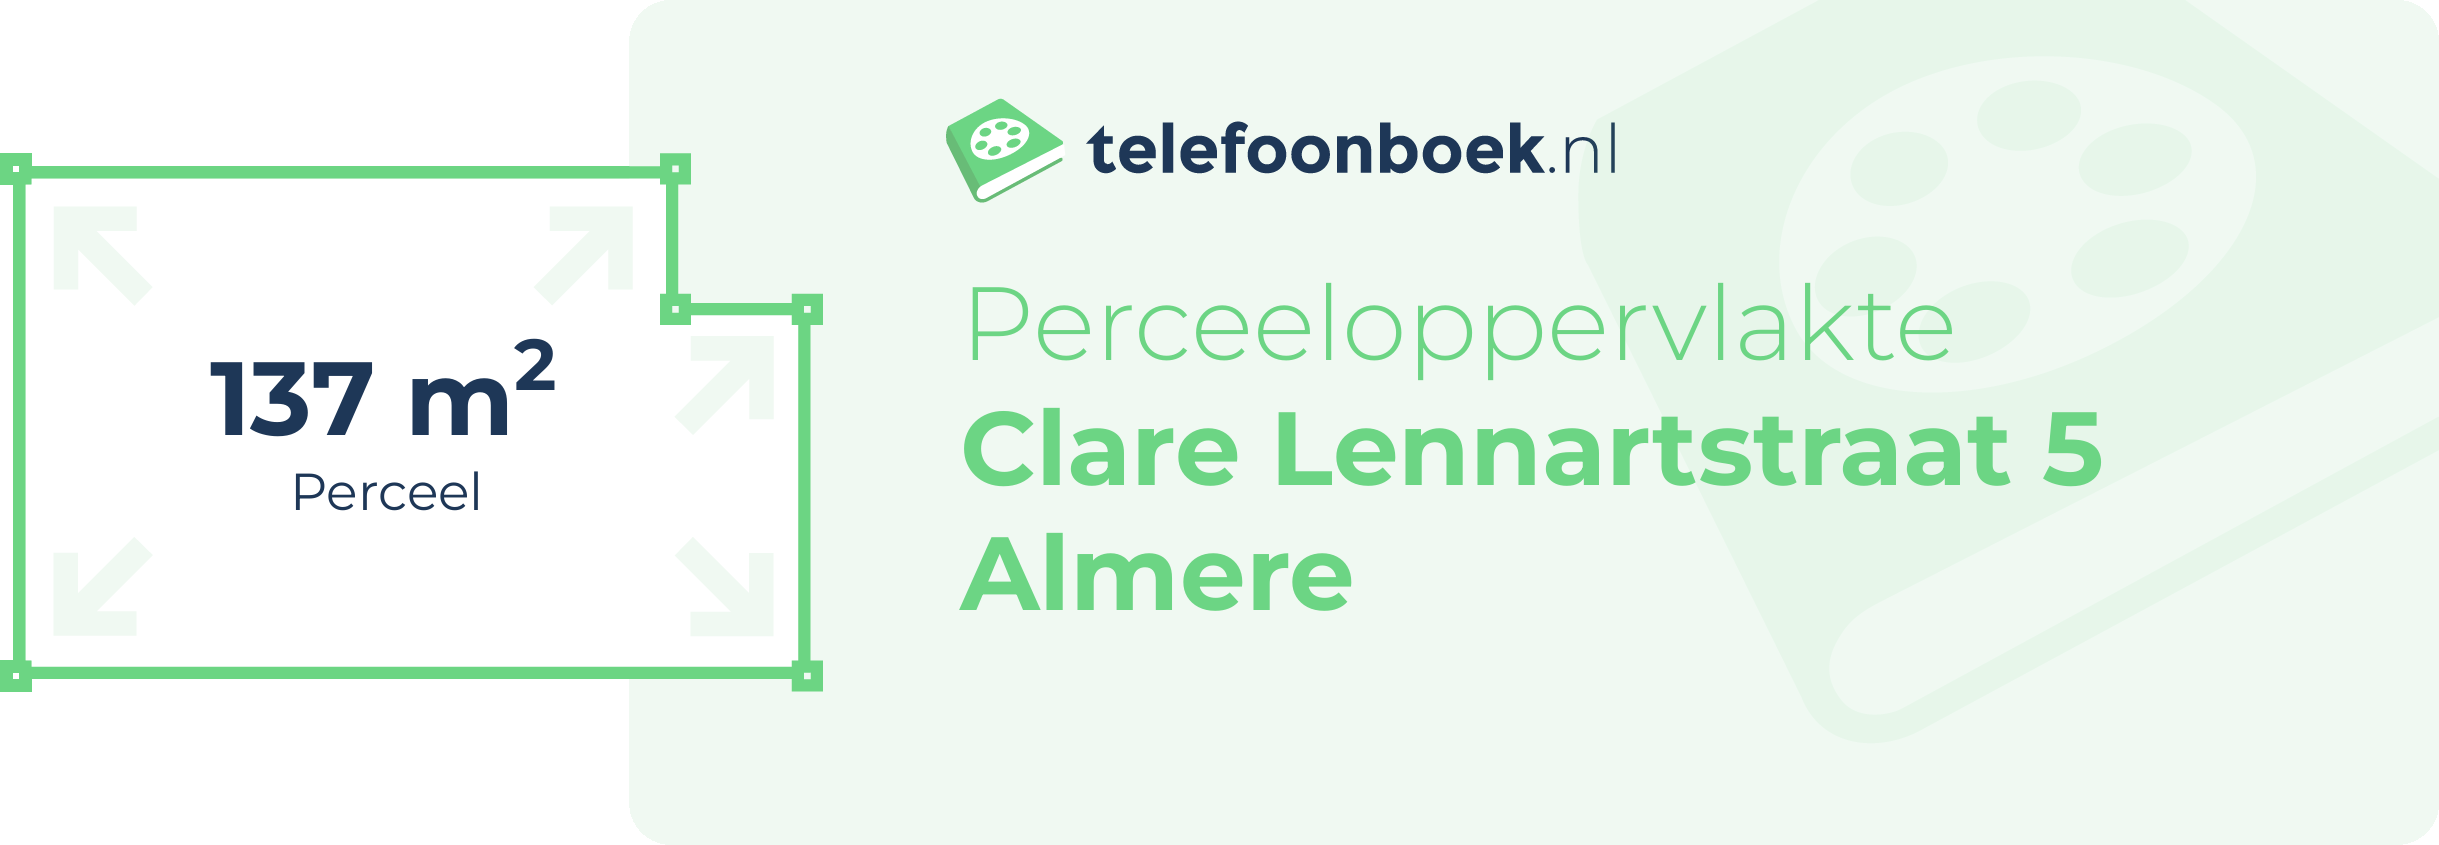 Perceeloppervlakte Clare Lennartstraat 5 Almere